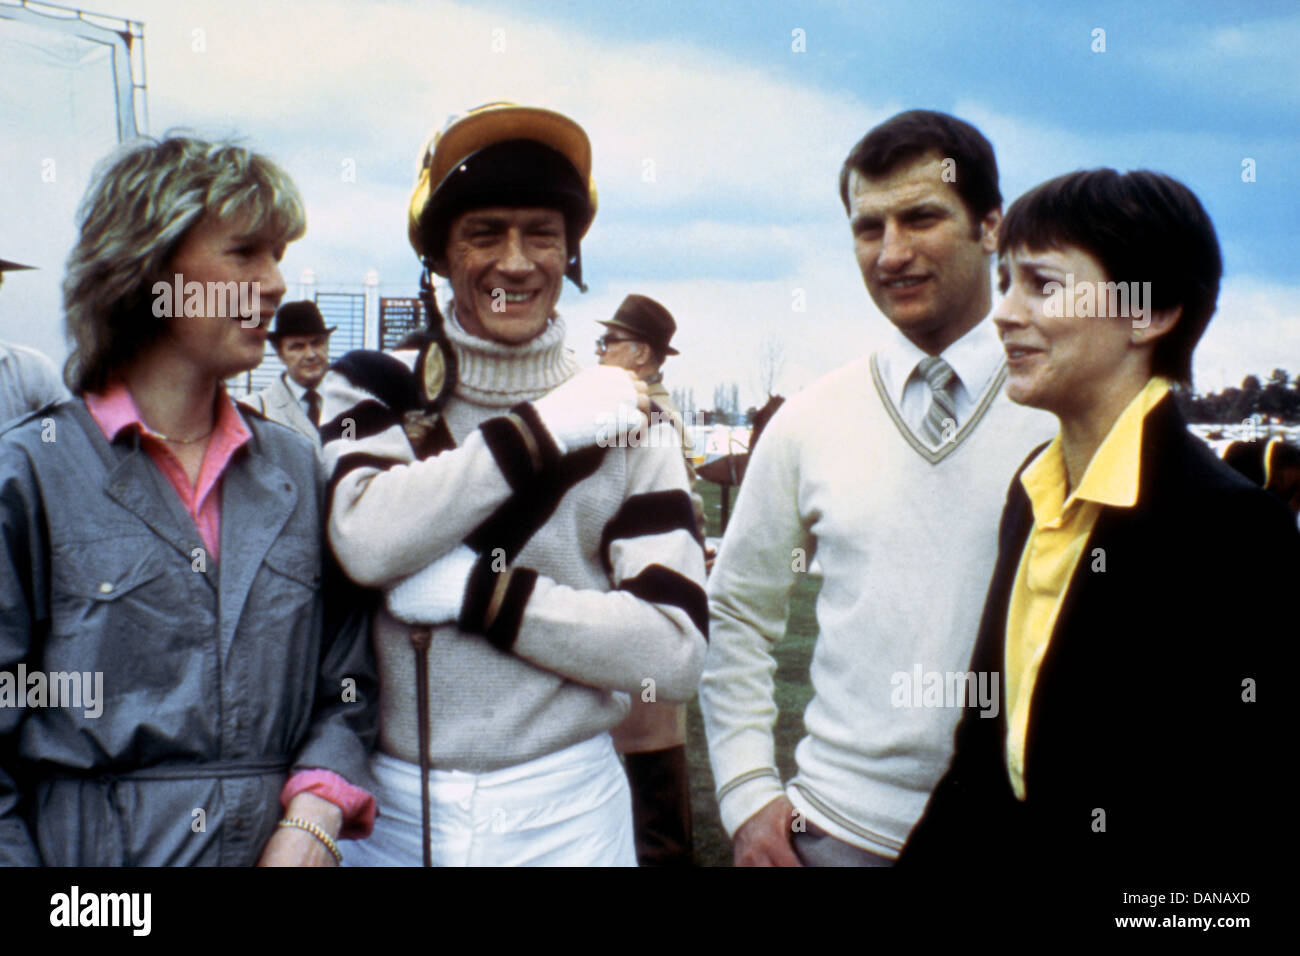 Champions 1984 john hurt hi-res stock photography images - Alamy